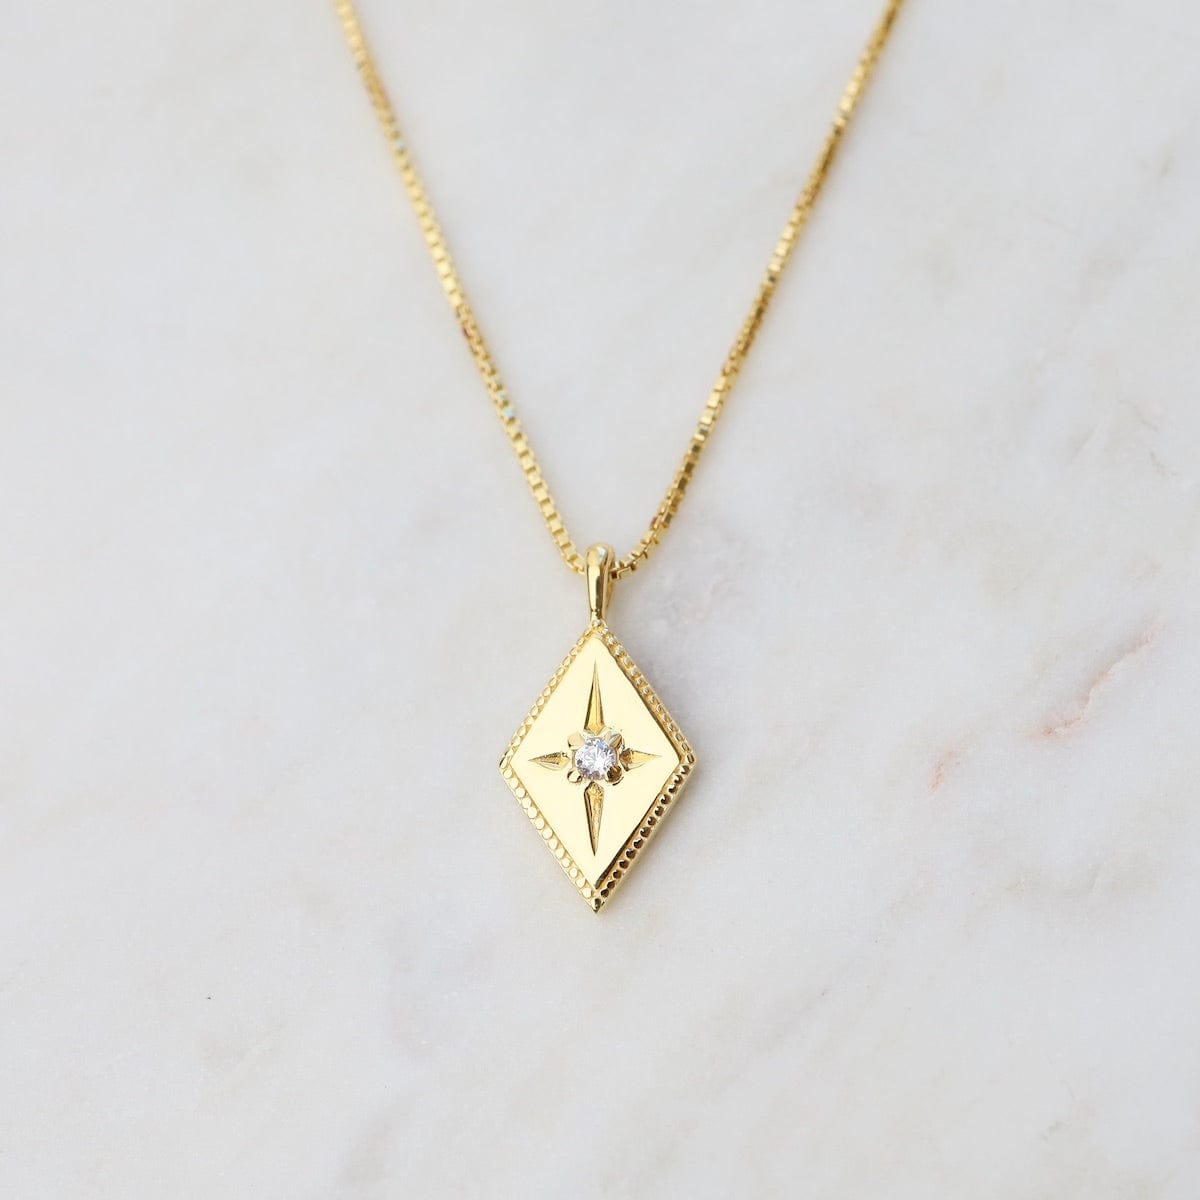 NKL-VRM Diamond Shape with Star-set CZ Box Chain Necklace - Gold Vermeil